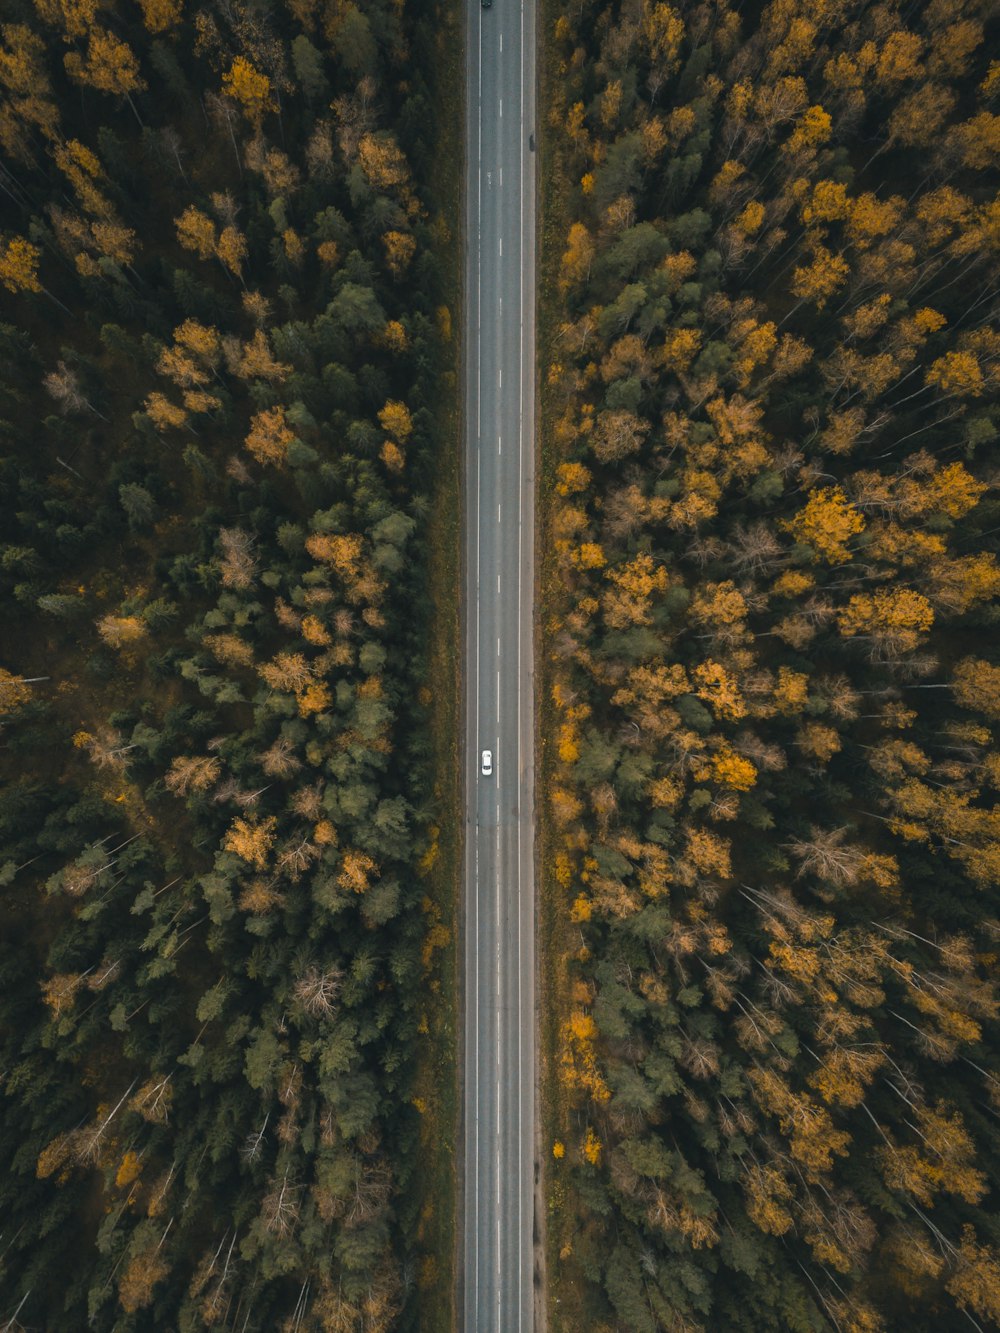 vehicle traveling on road between trees